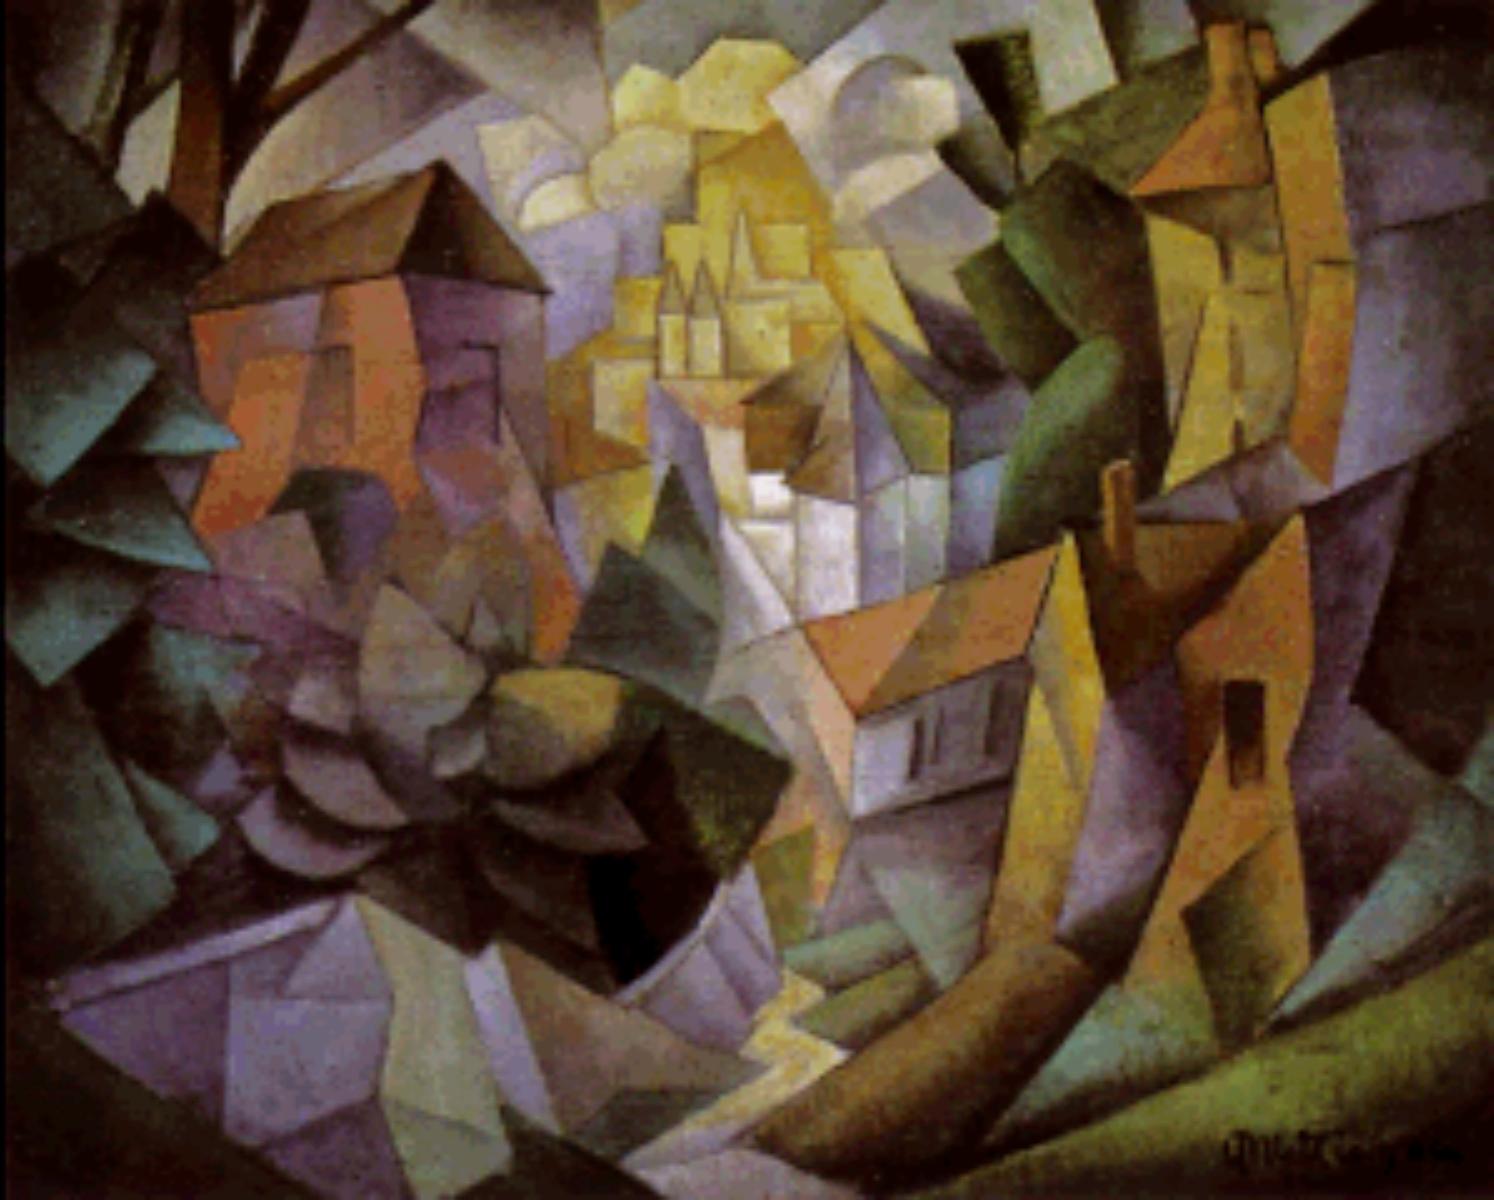 Cubism (190x - 1914)